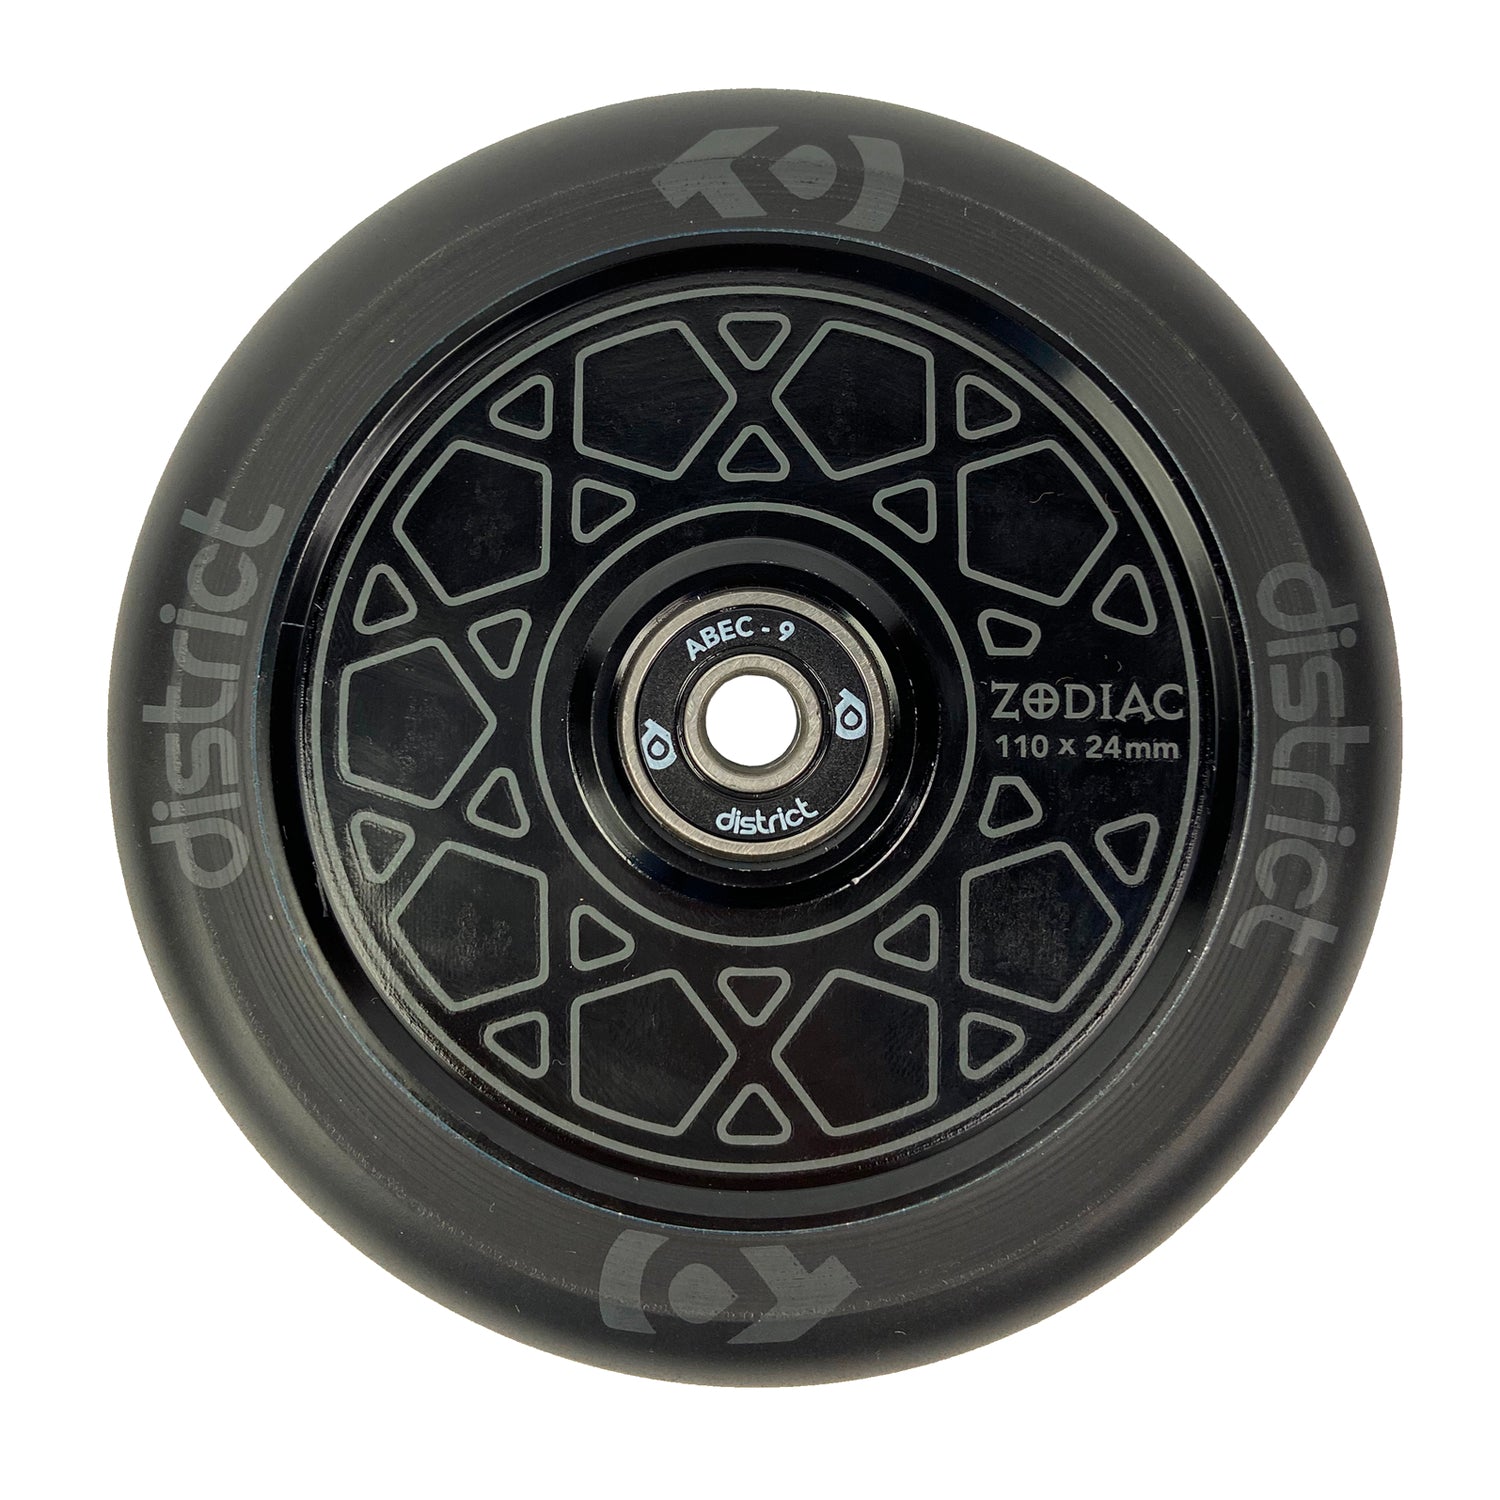 District Zodiac Wheel 110mm - Black - Prime Delux Store